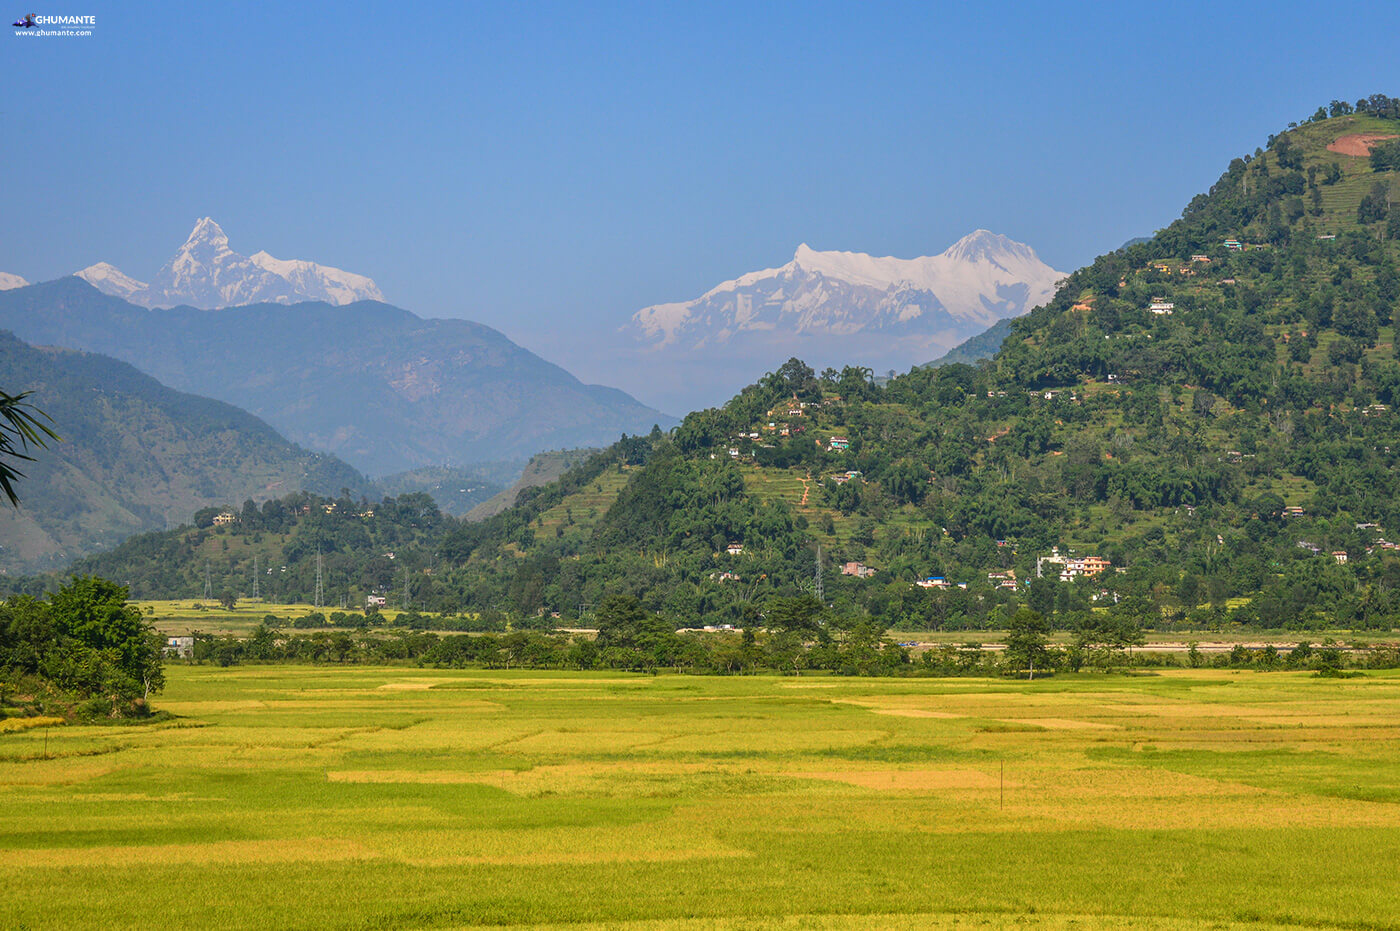 Paddy fields of Amale village, with Machhapuchre , Annapurna Range